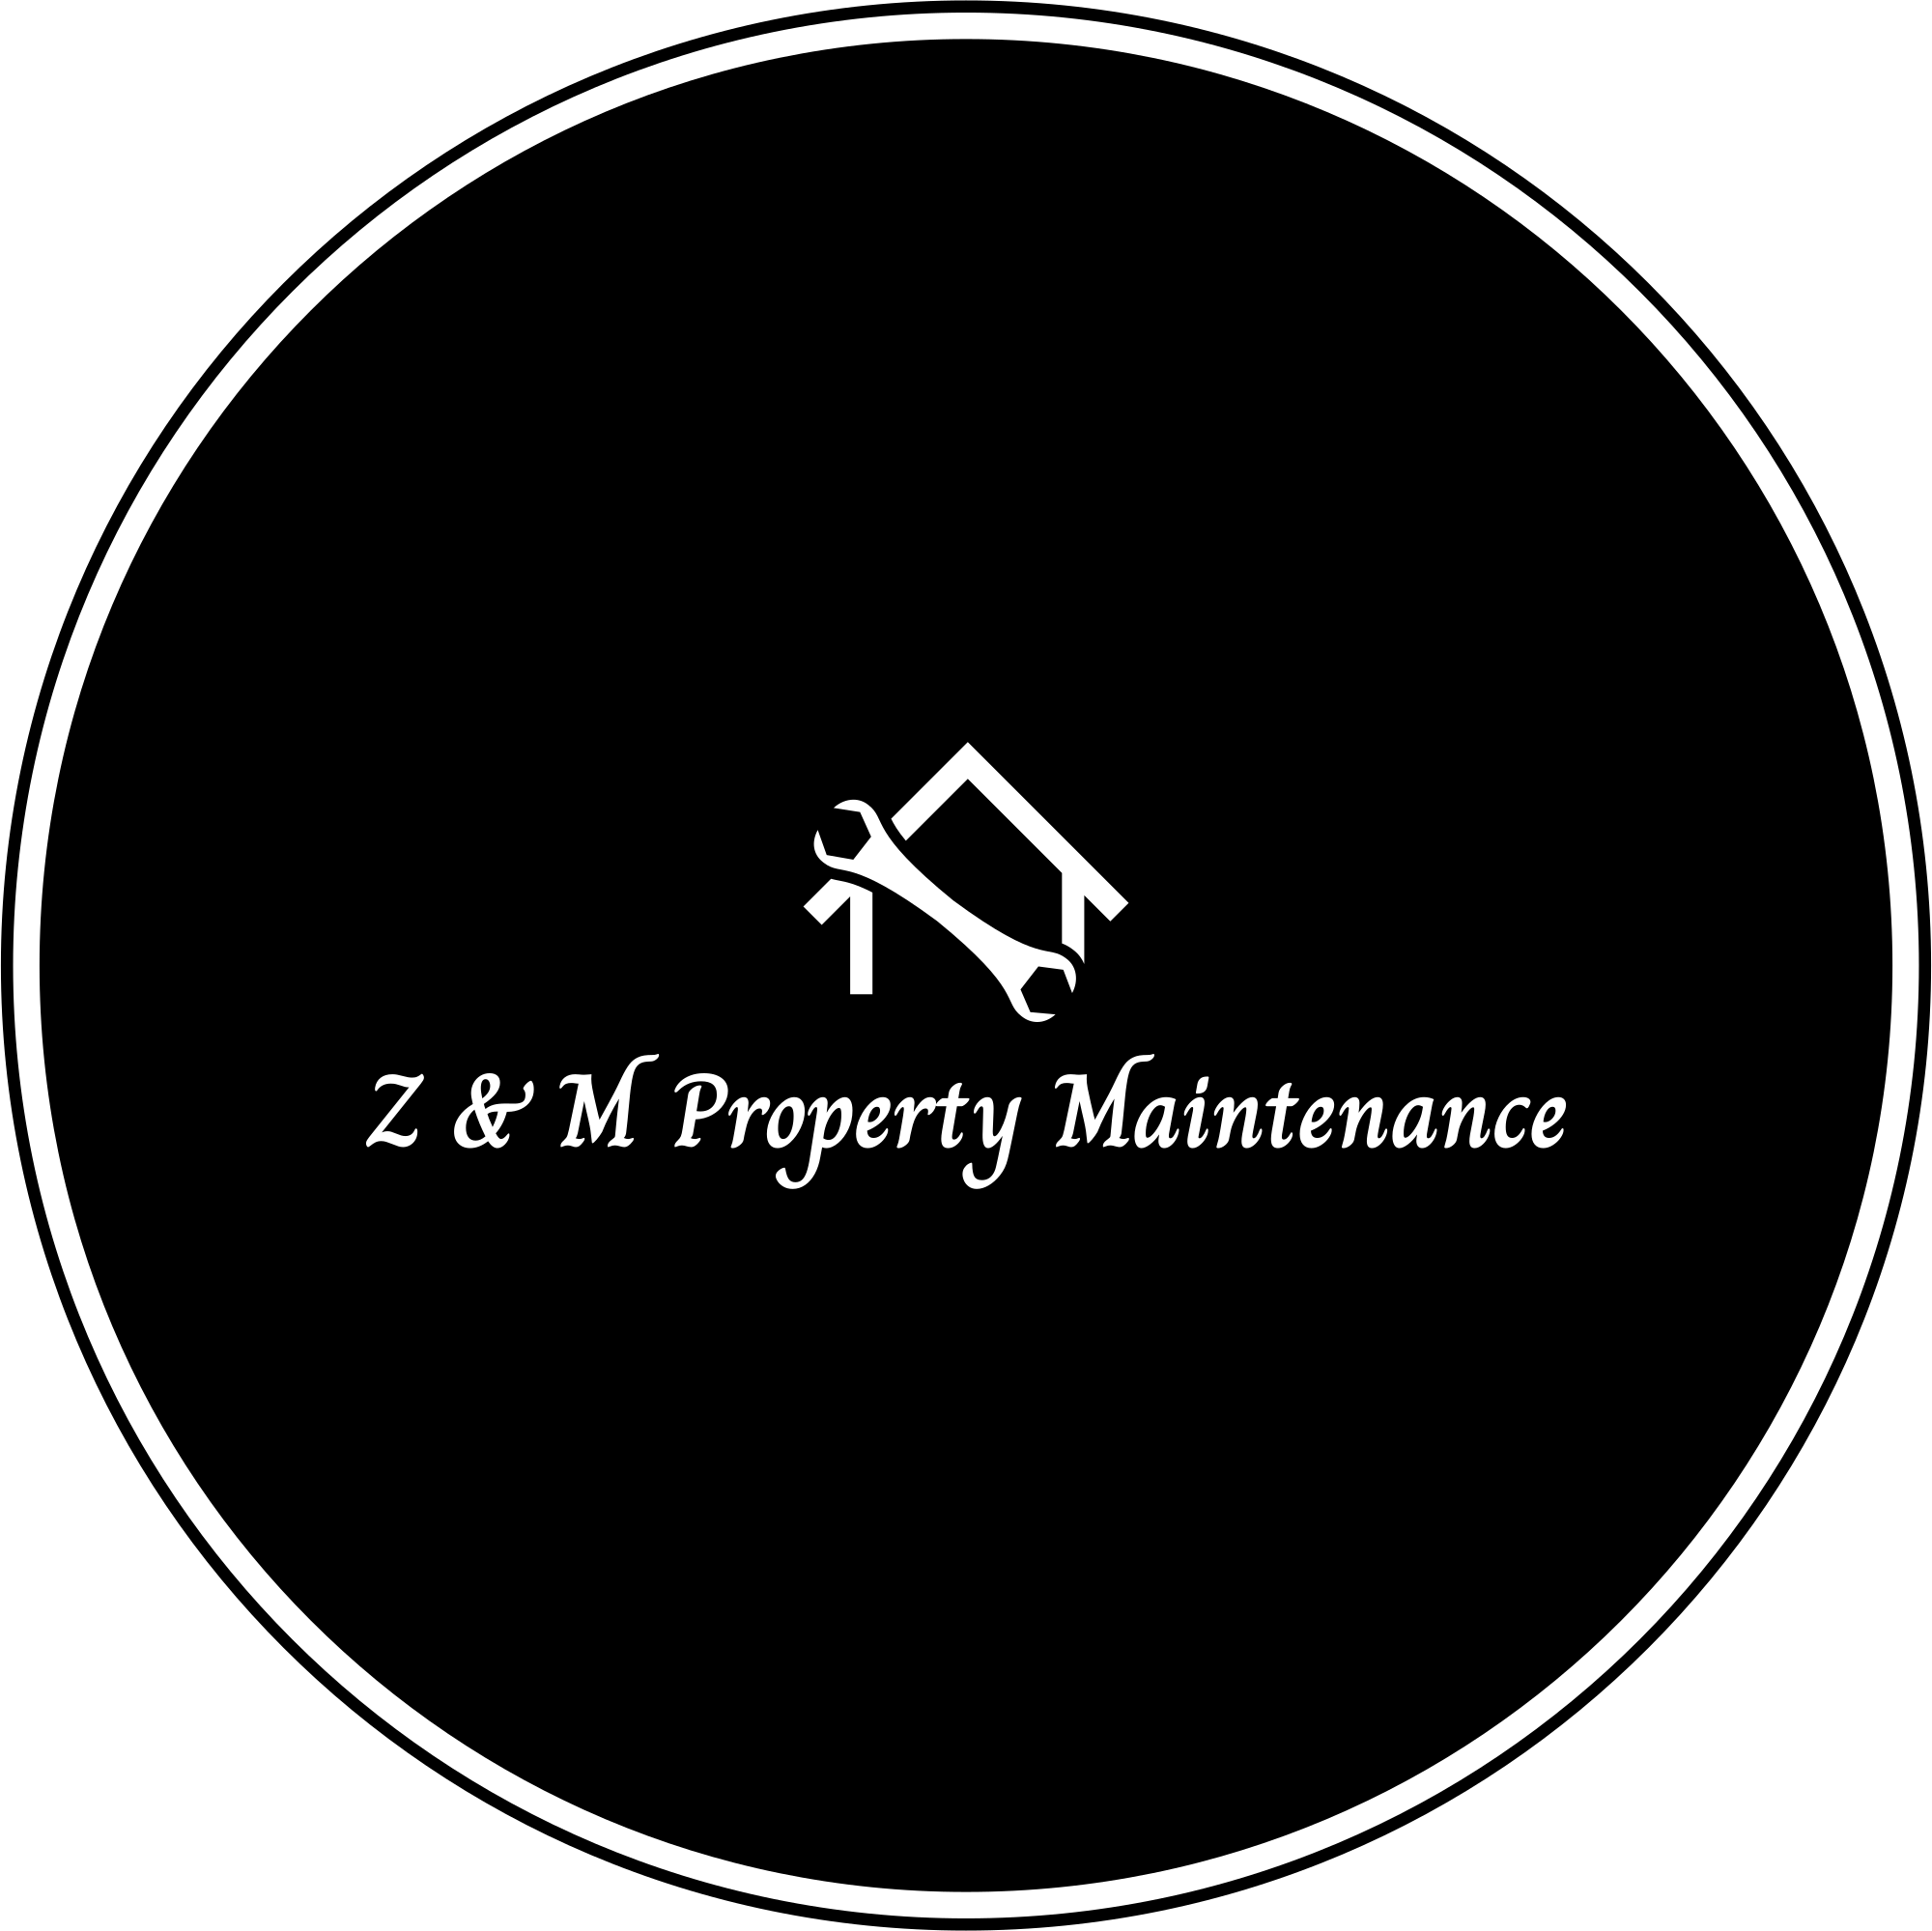 Z & M Property Maintenance Logo